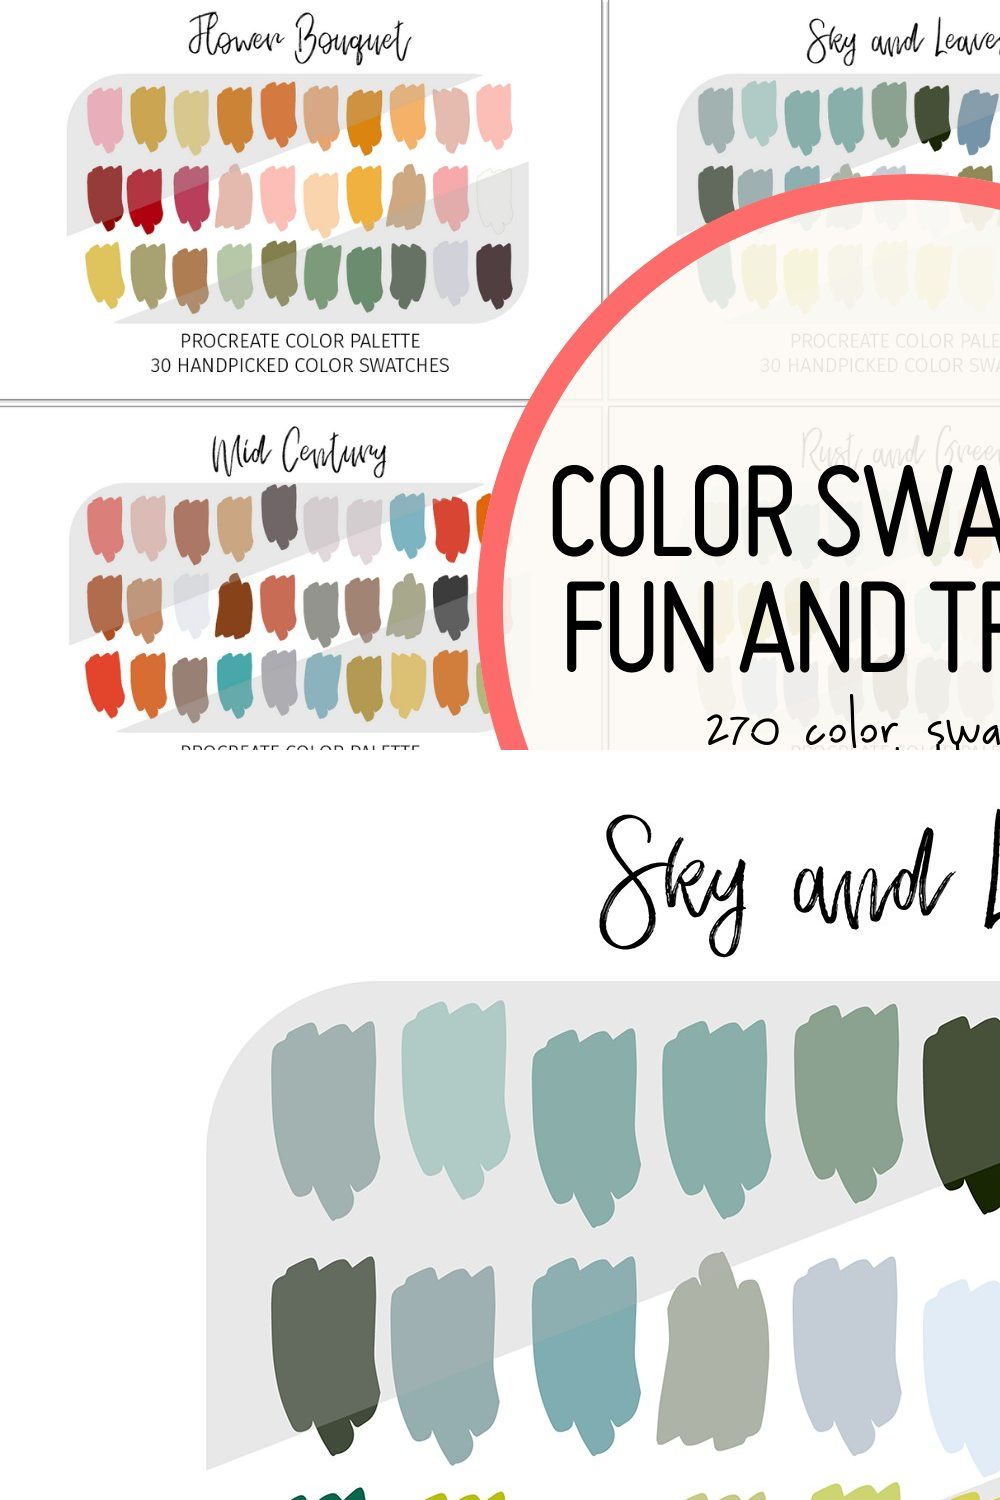 Procreate Trendy Color Palettes pinterest preview image.